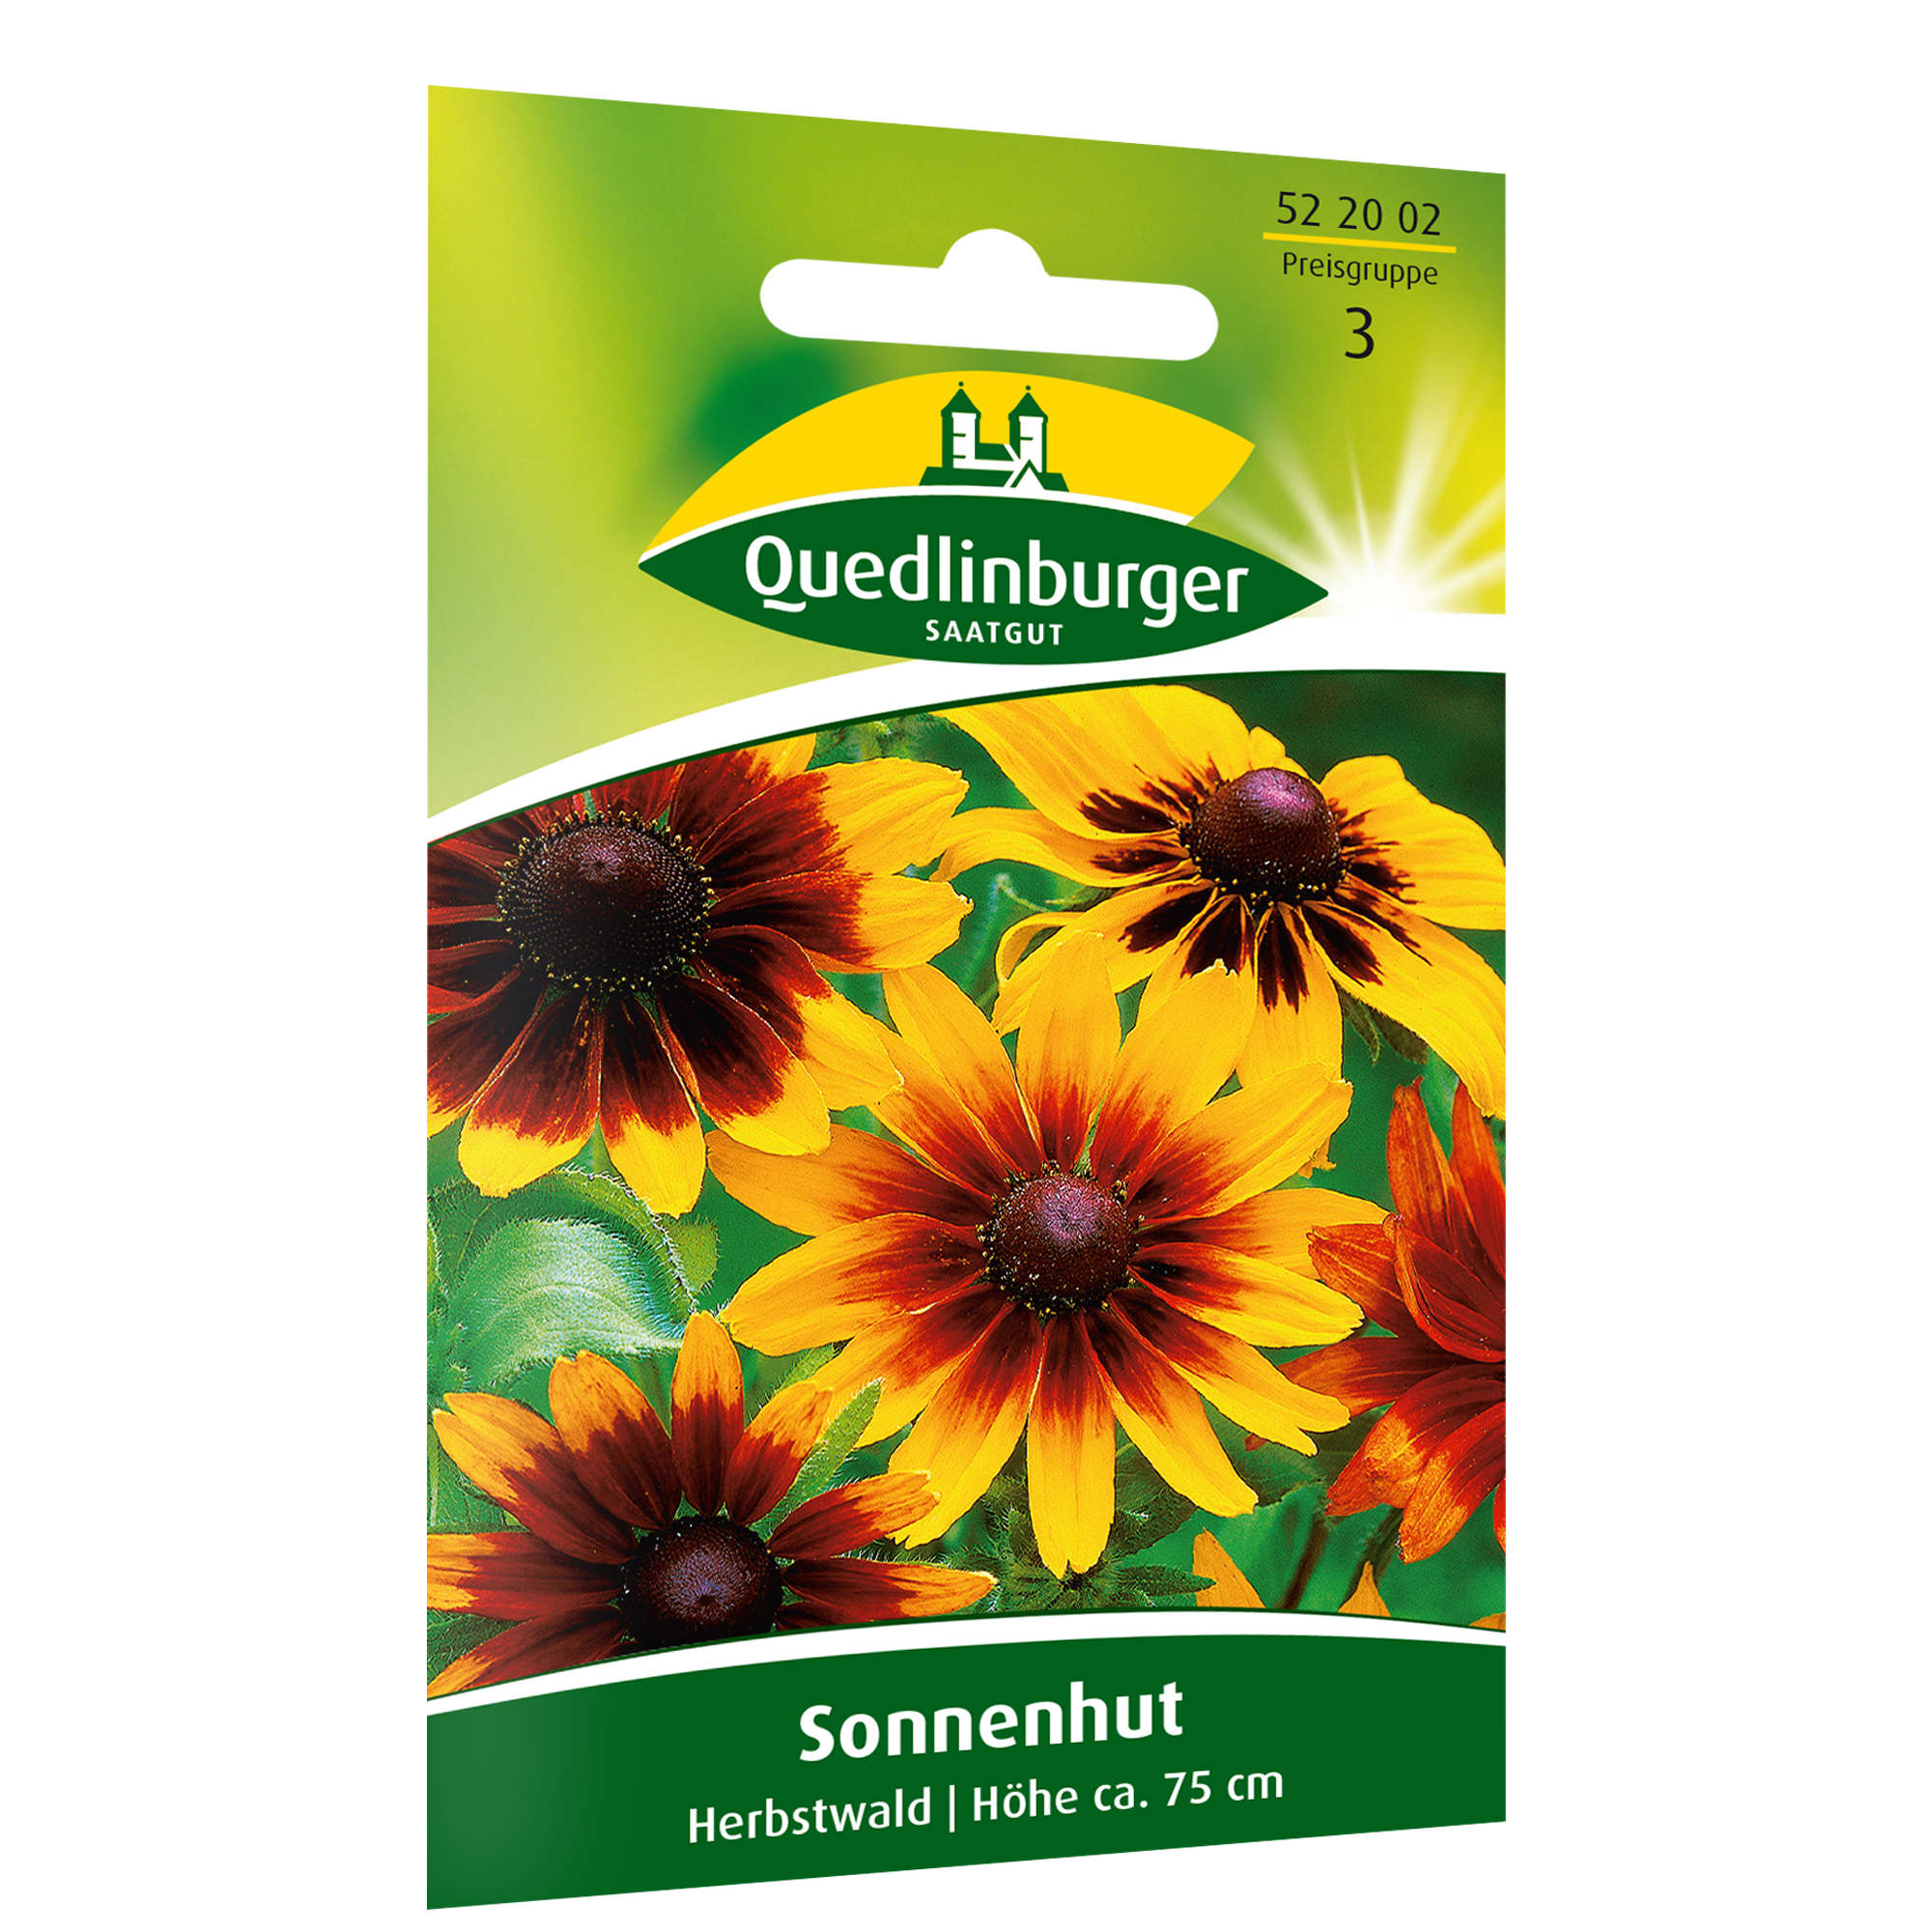 Sonnenhut 'Herbstwald' + product picture